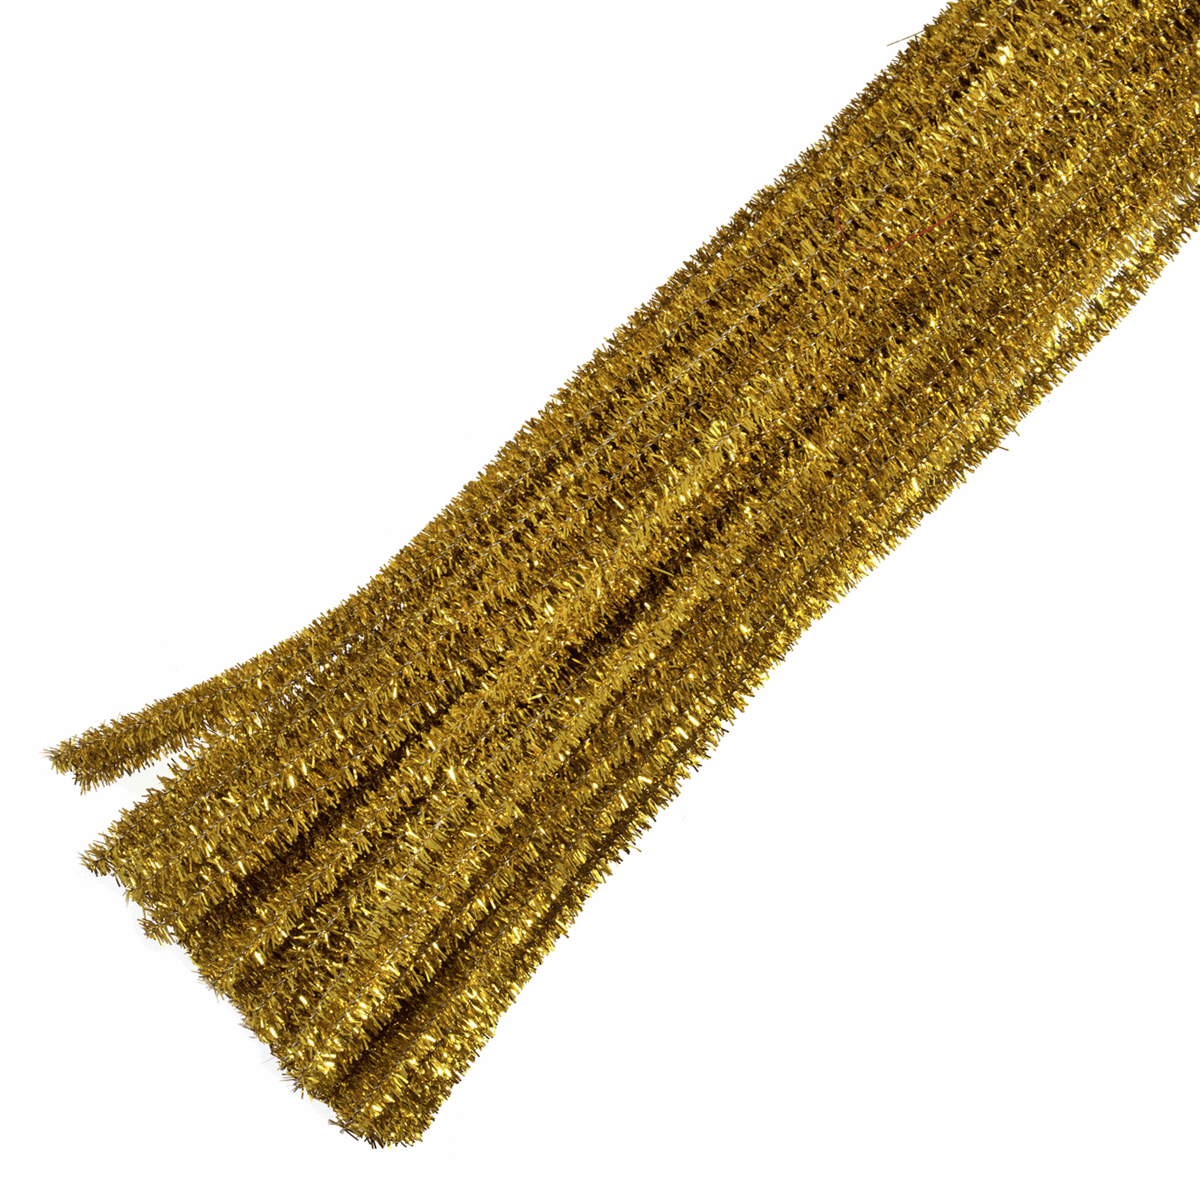 Trimits Gold Glitter Chenilles - 30cm x 6mm (Pack of 20)